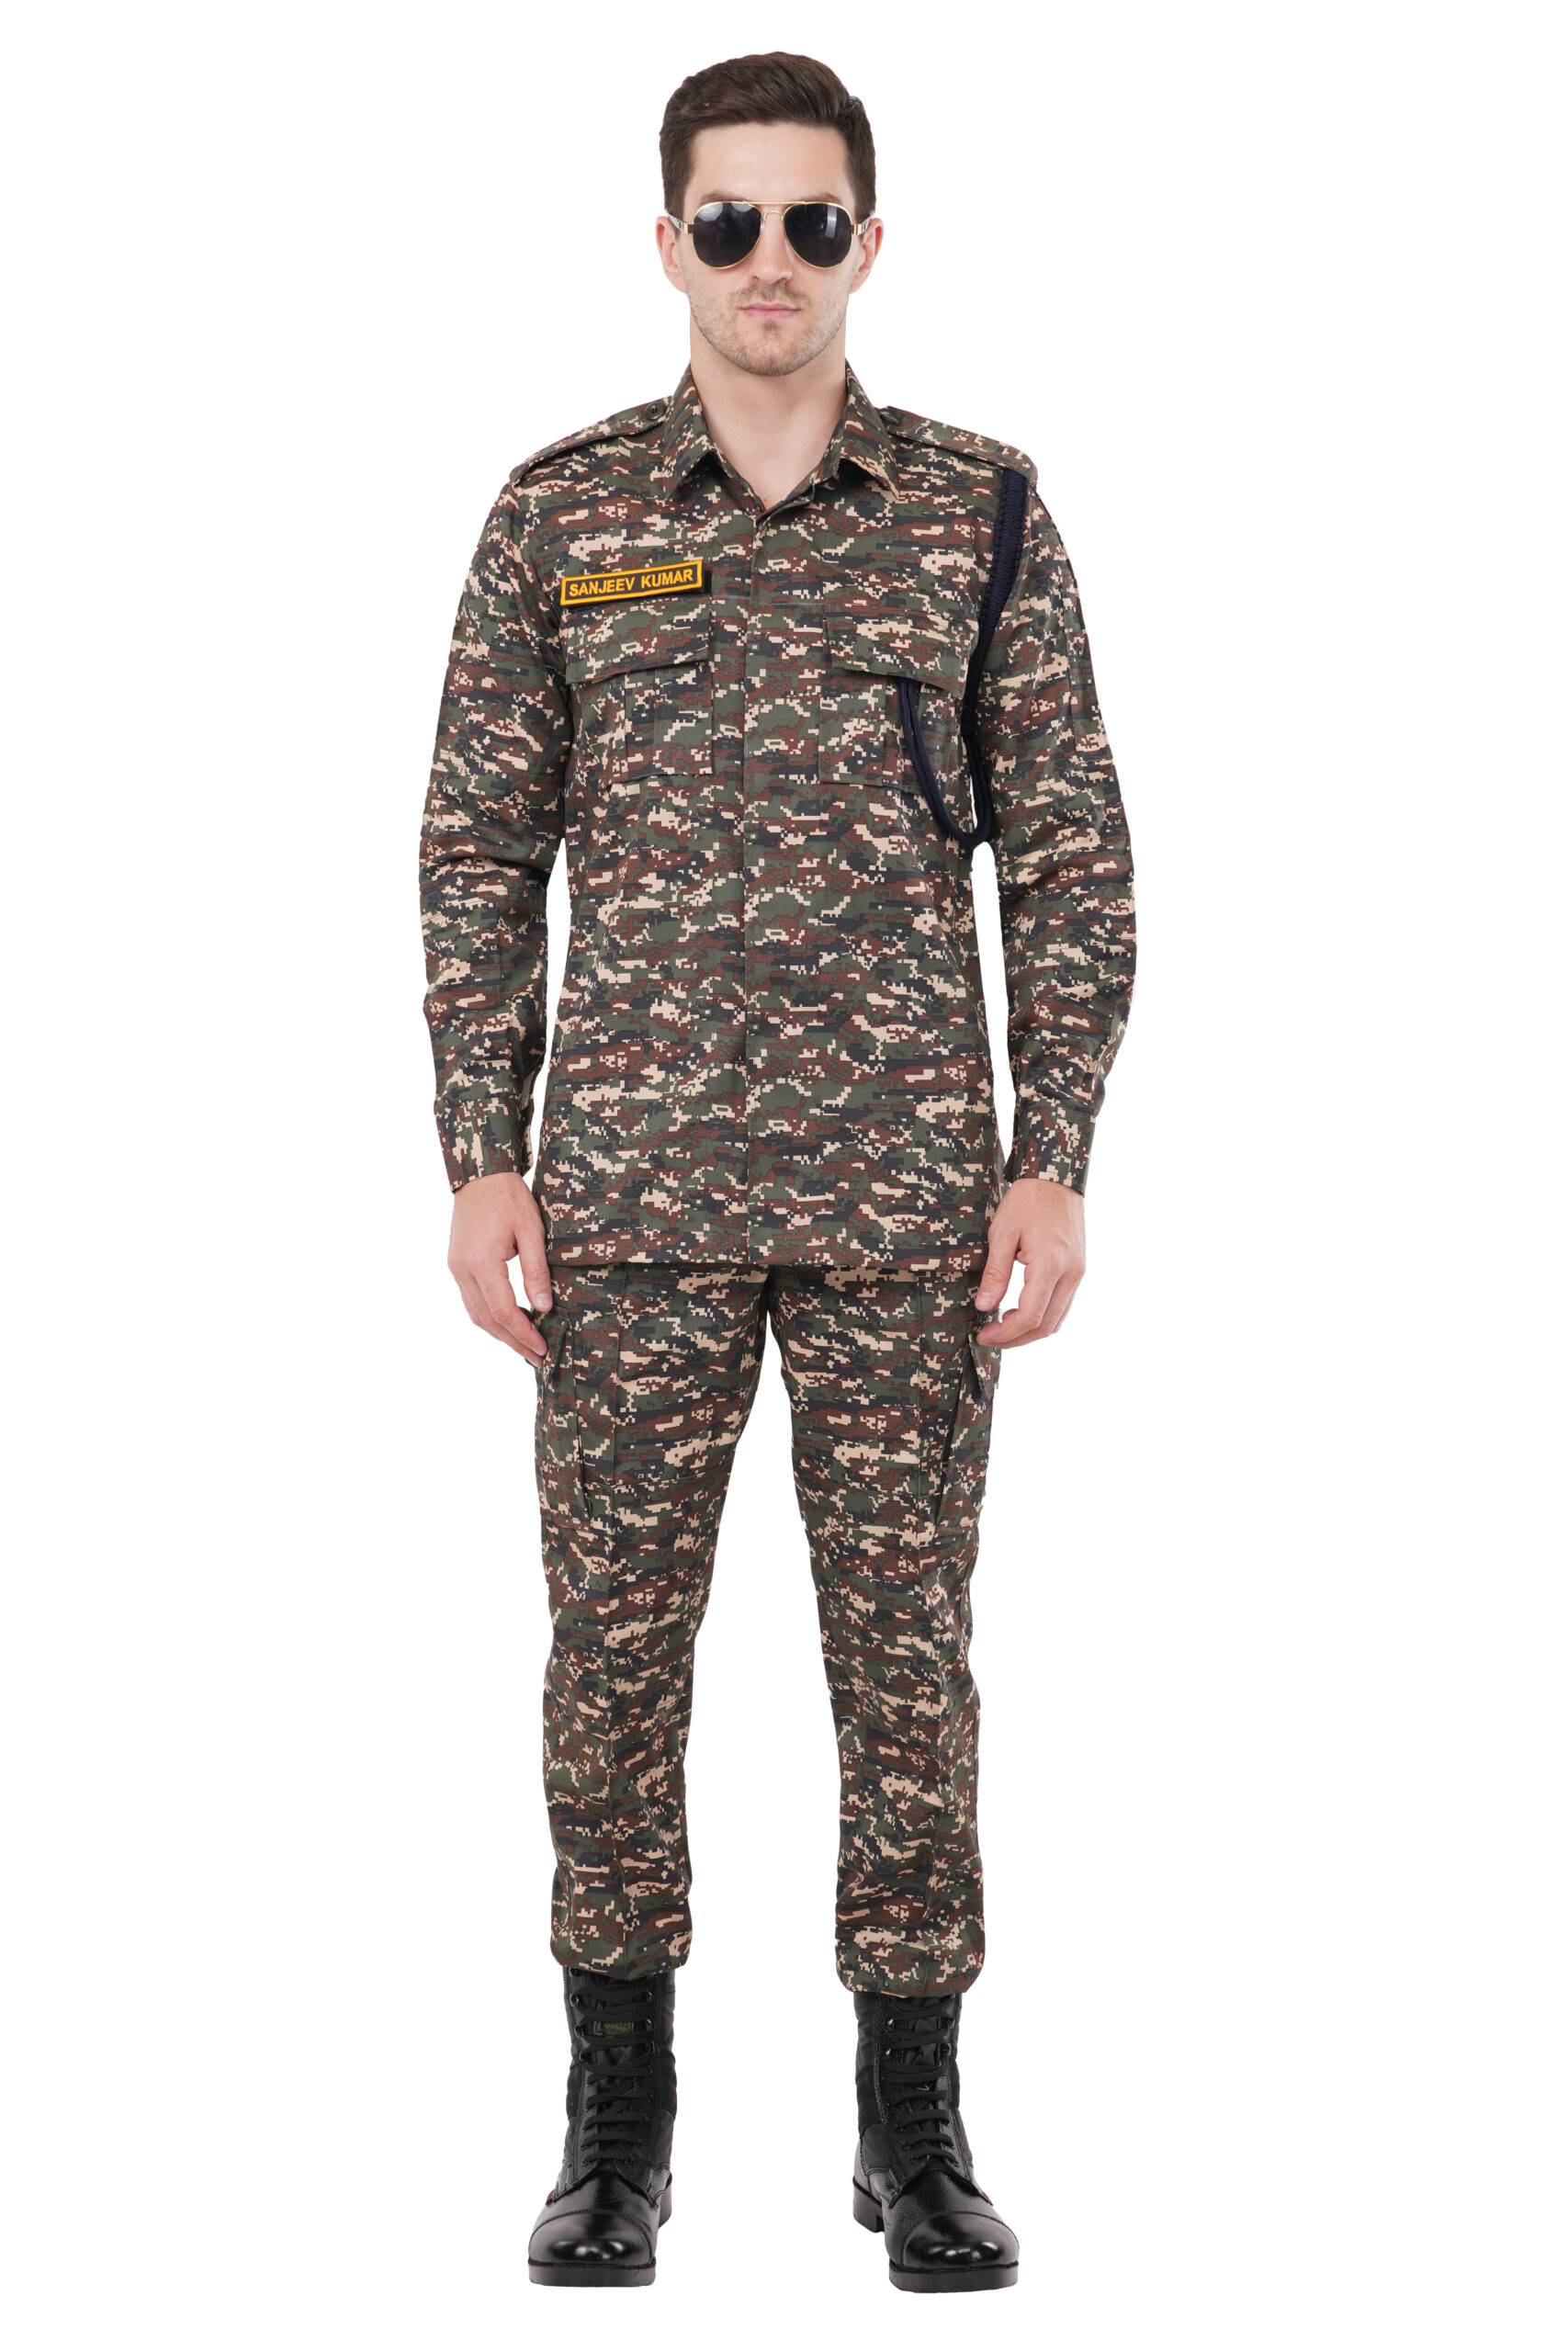 SSB US Pattern Combat Uniform